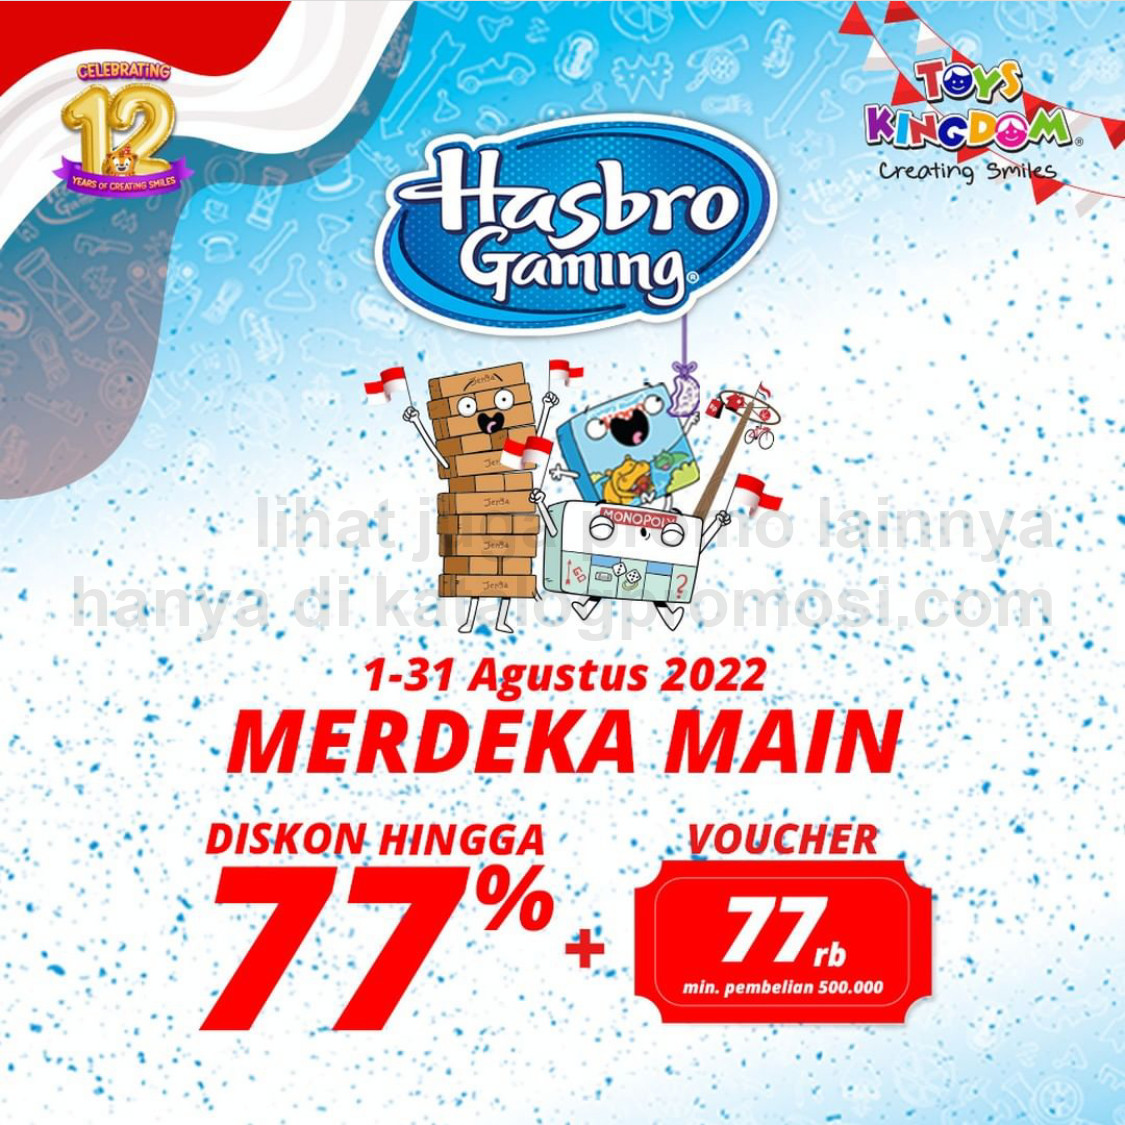 Promo TOYS KINGDOM MERDEKA MAIN! DISKON 77% untuk produk Hasbro Gaming!